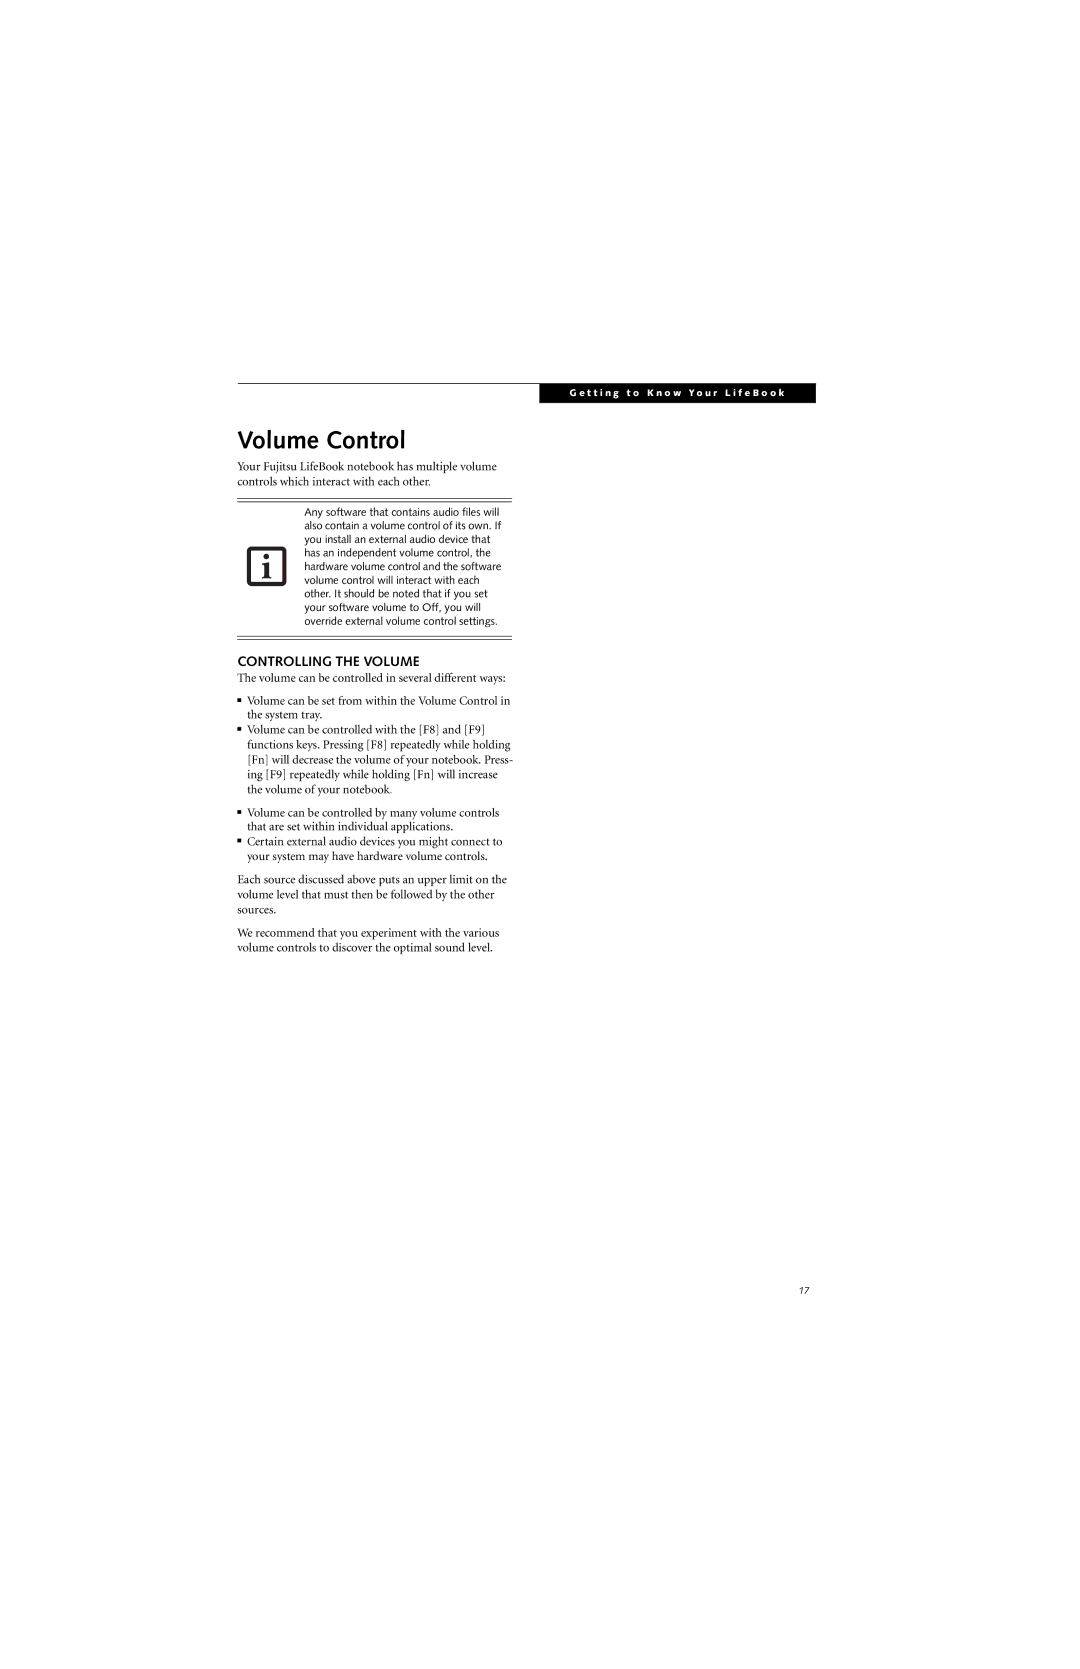 Fujitsu P7230 manual Volume Control, Controlling the Volume 